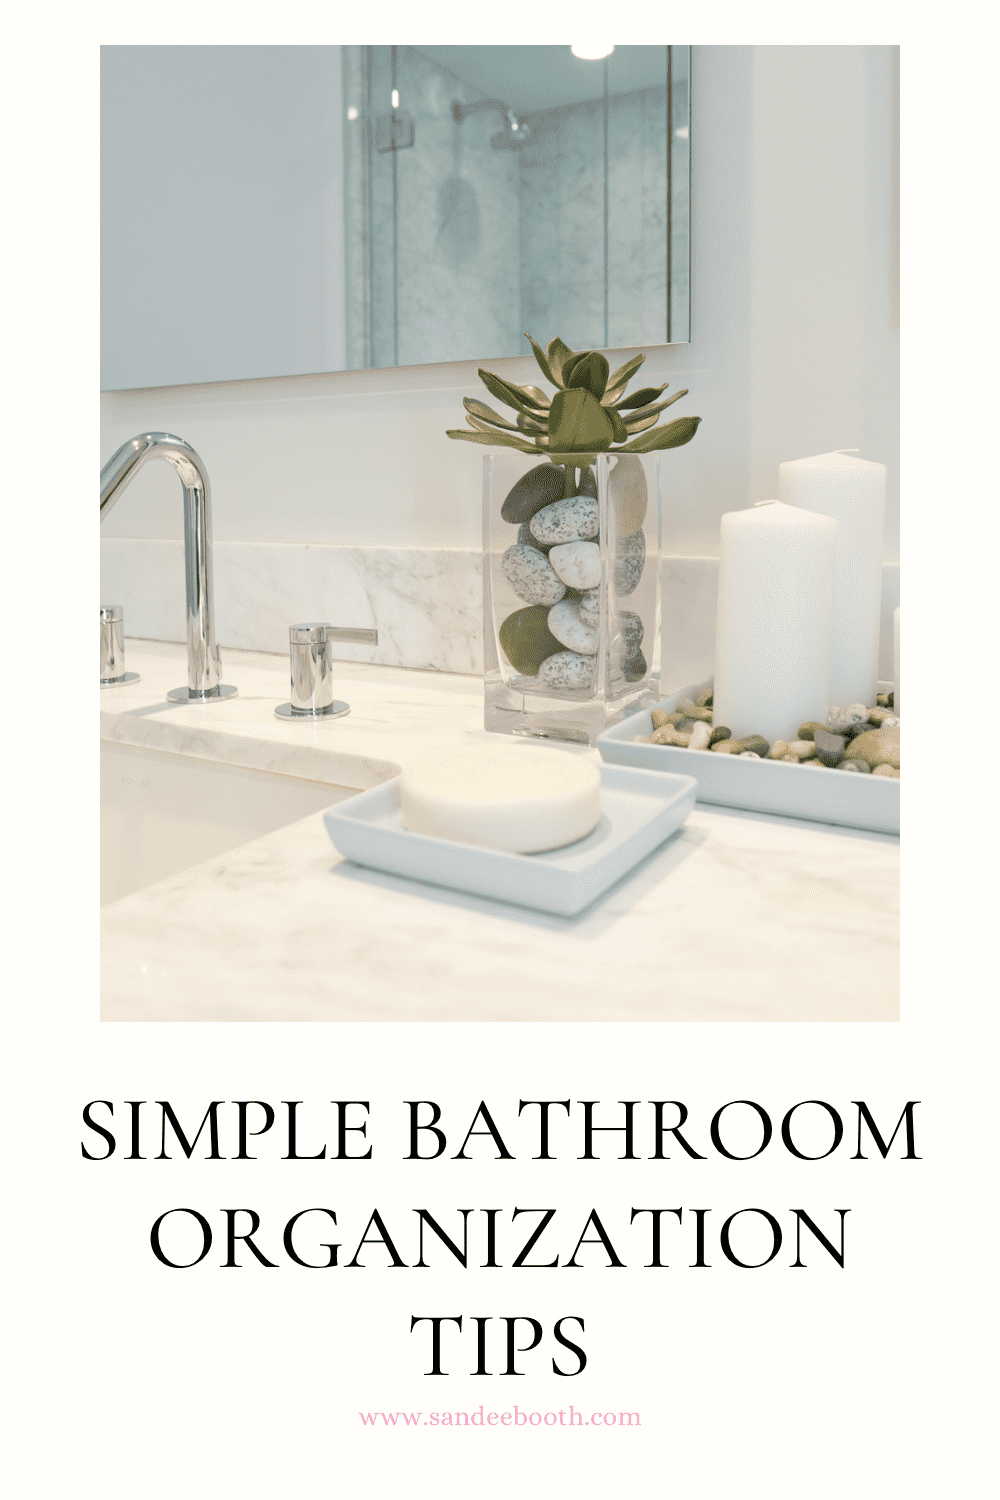 Easy Bathroom Organization Tips and Ideas – Sandee Booth